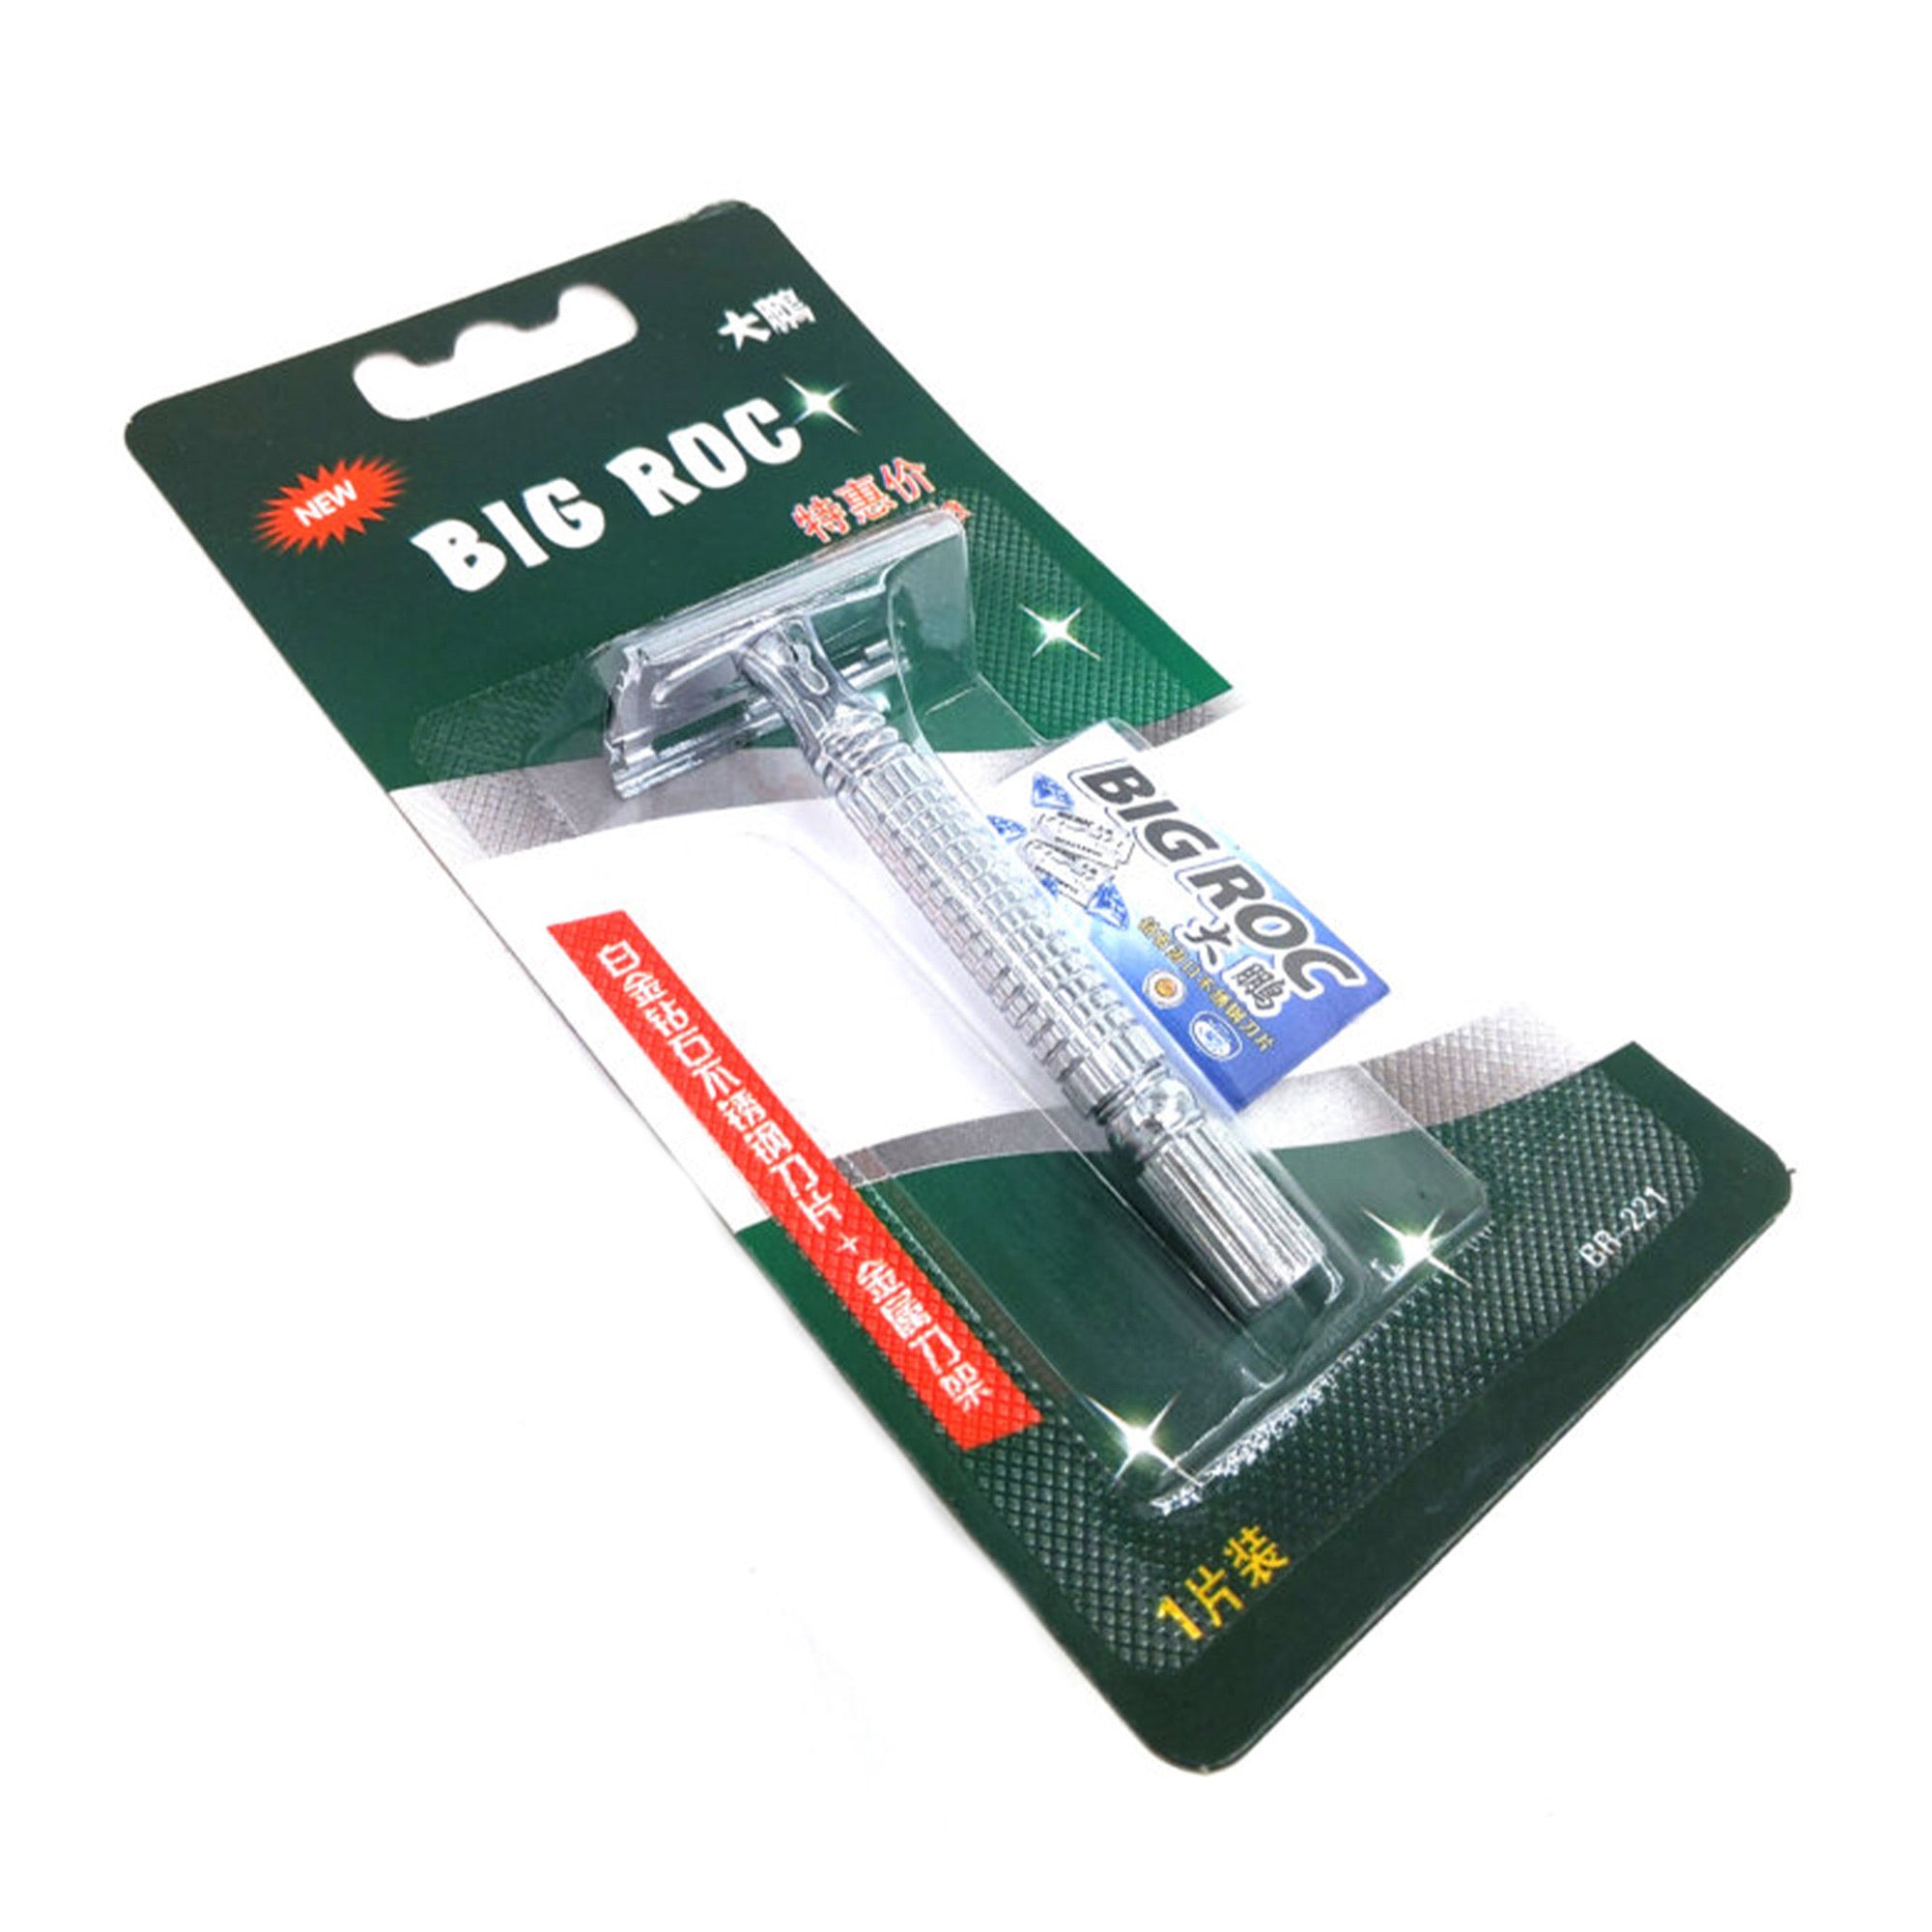 Big Roc - BR-221 Classic Double Edge Safety Razor with Premium Platinum Blades